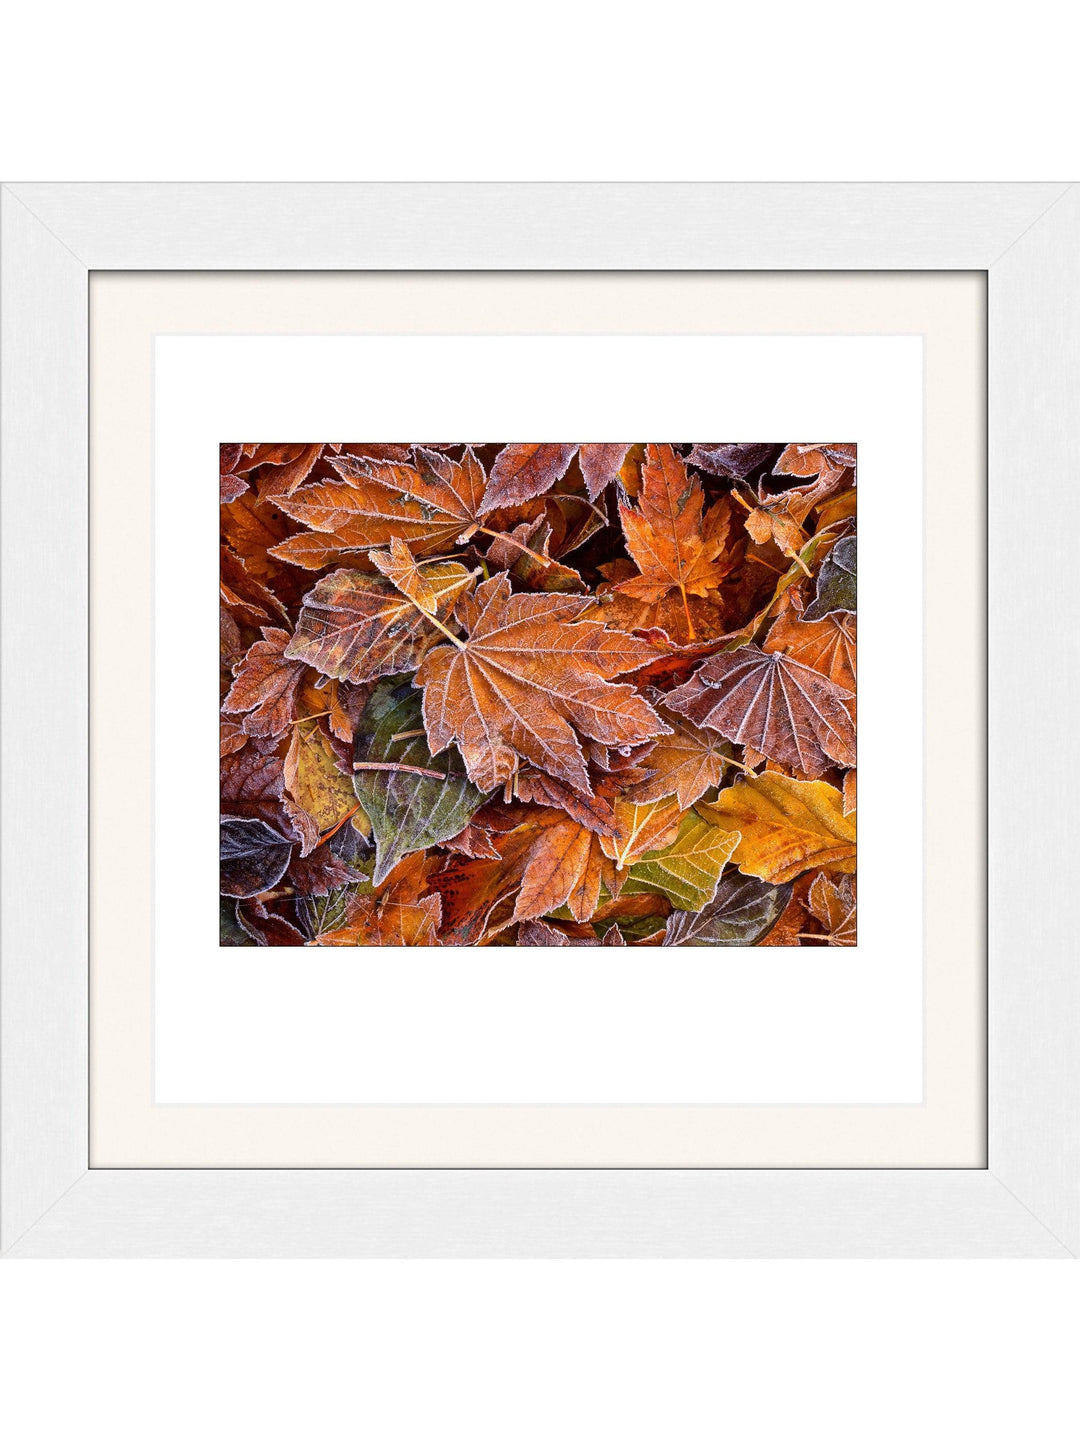 Autumn's First Frost Square Edition - Square Editions - Richard Stefani - Stefani Fine Art